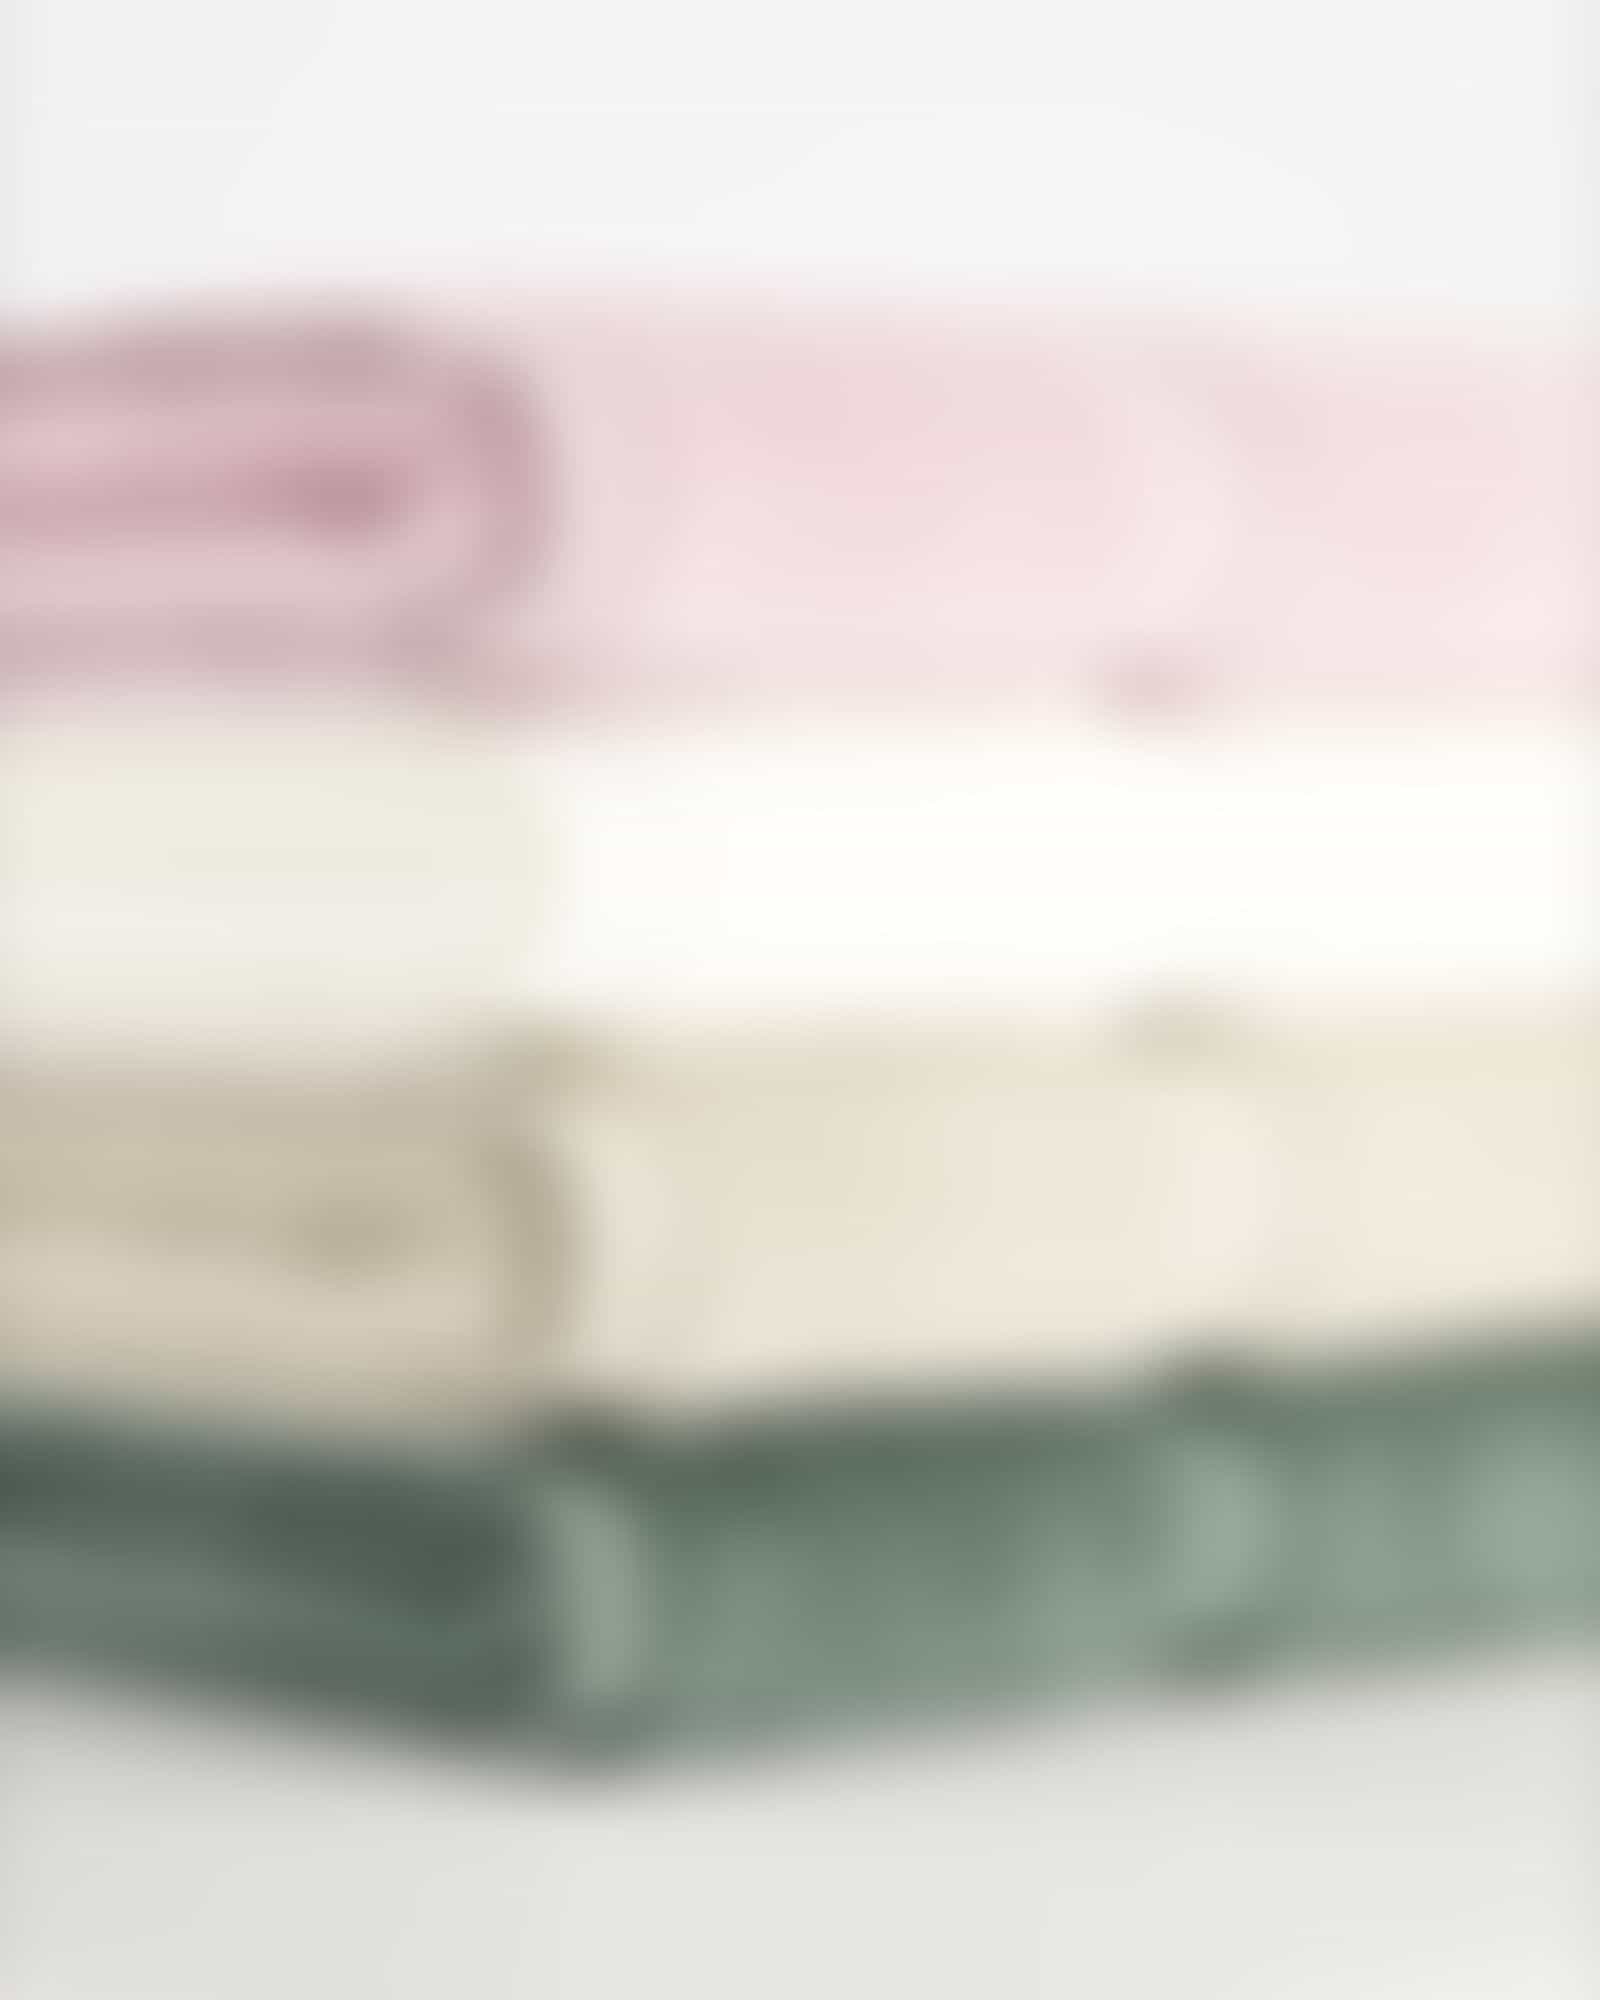 Vossen Handtücher Belief - Farbe: sea lavender - 3270